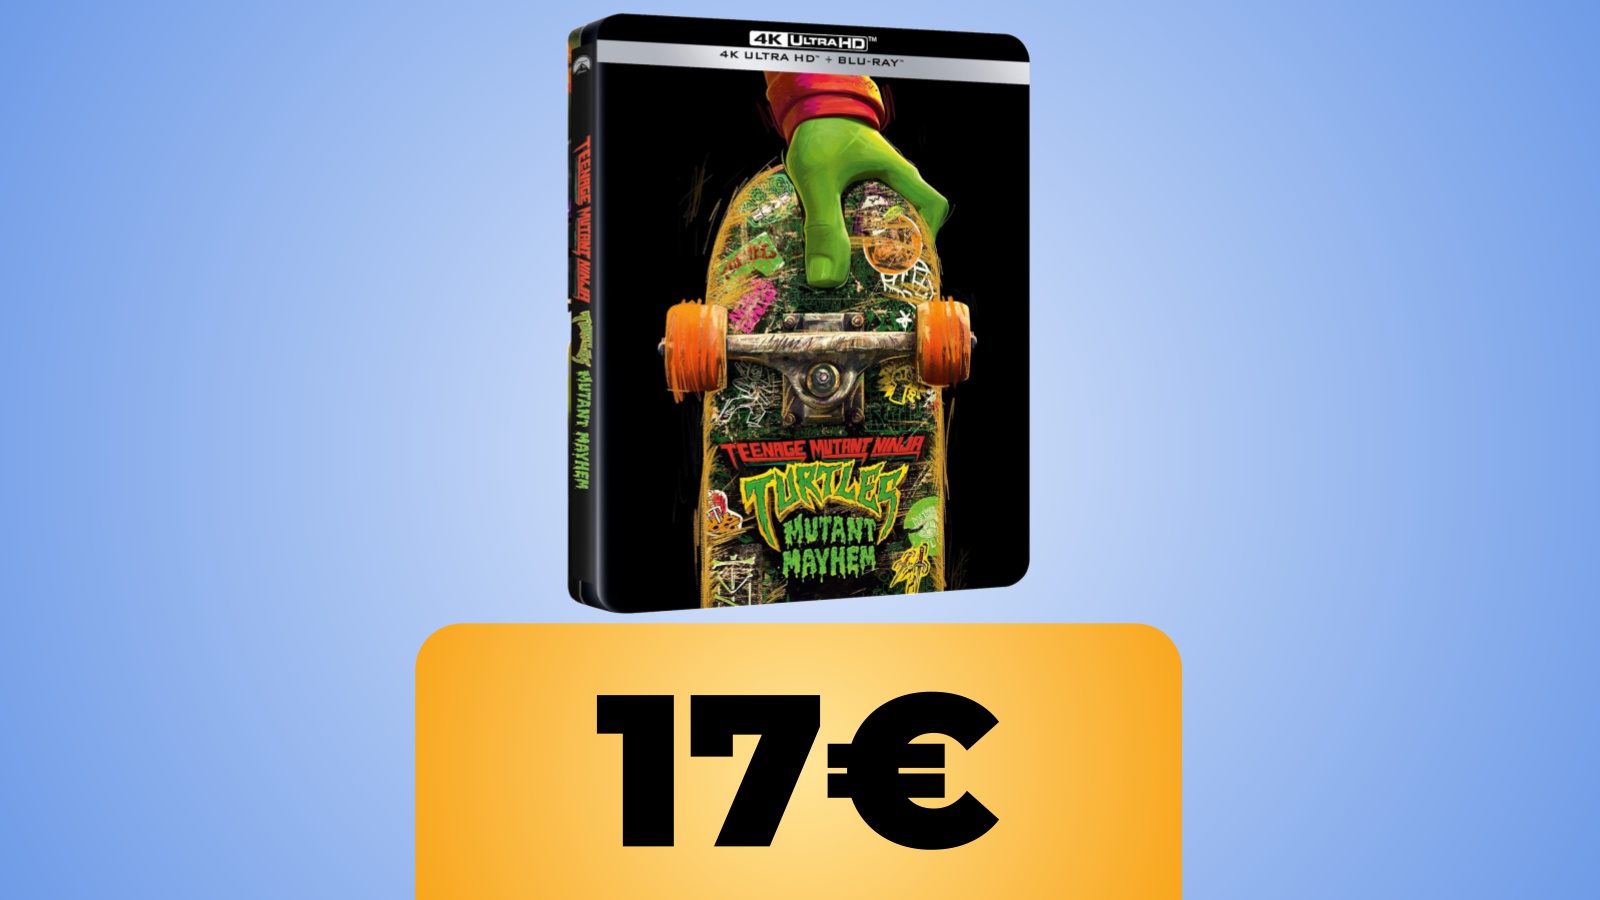 Steelbook 4K UHD + Blu-ray di Tartarughe Ninja - Caos Mutante al prezzo minimo su Amazon